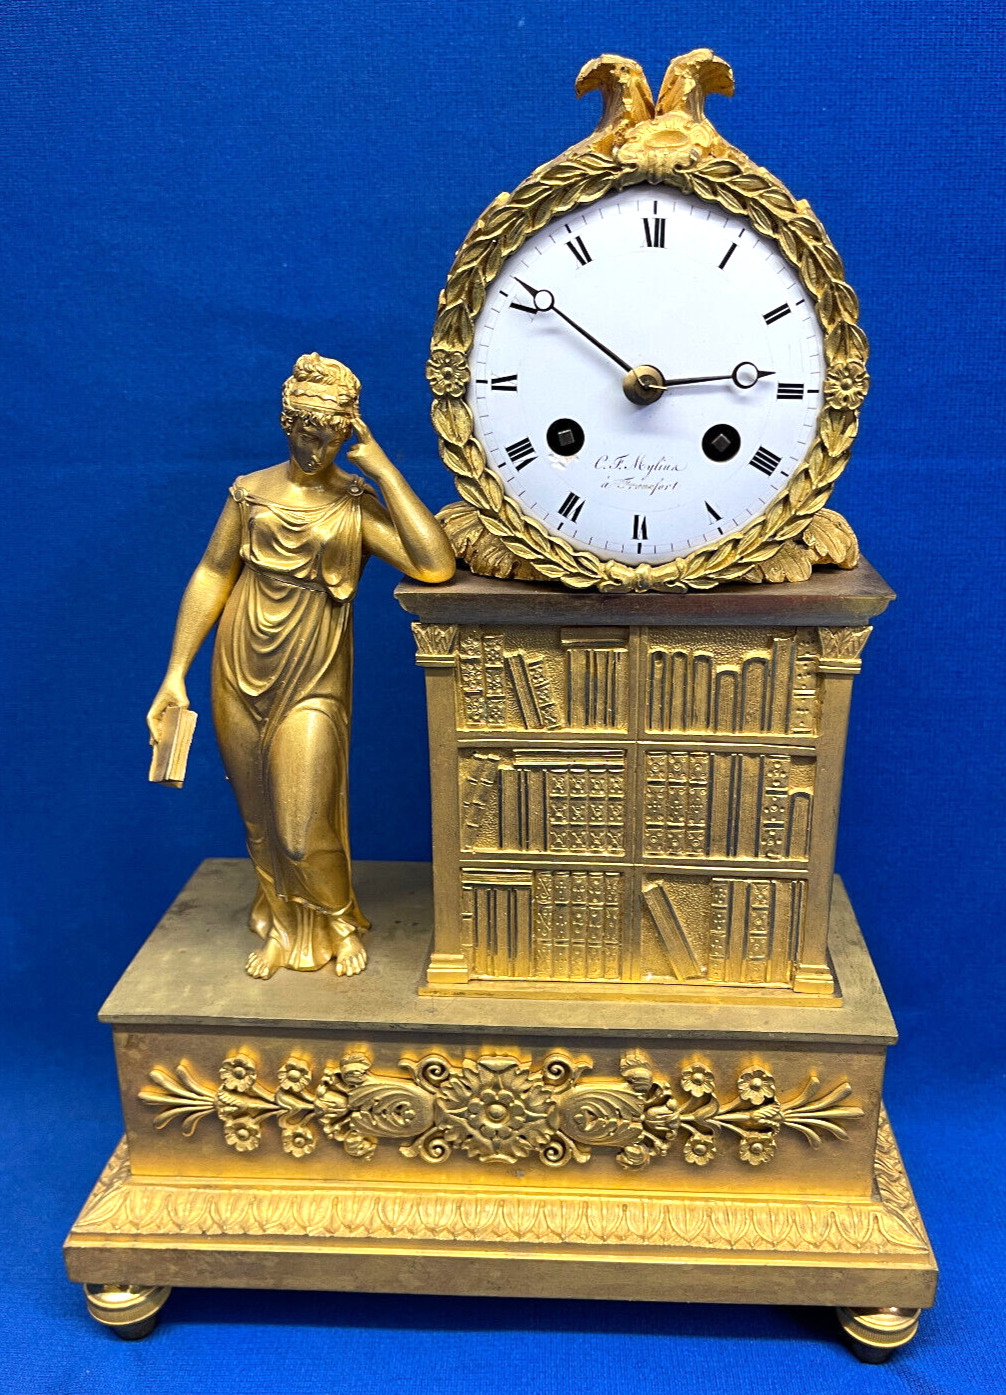 Rare Antique 1810 French Library Silk Thread Mantel Clock